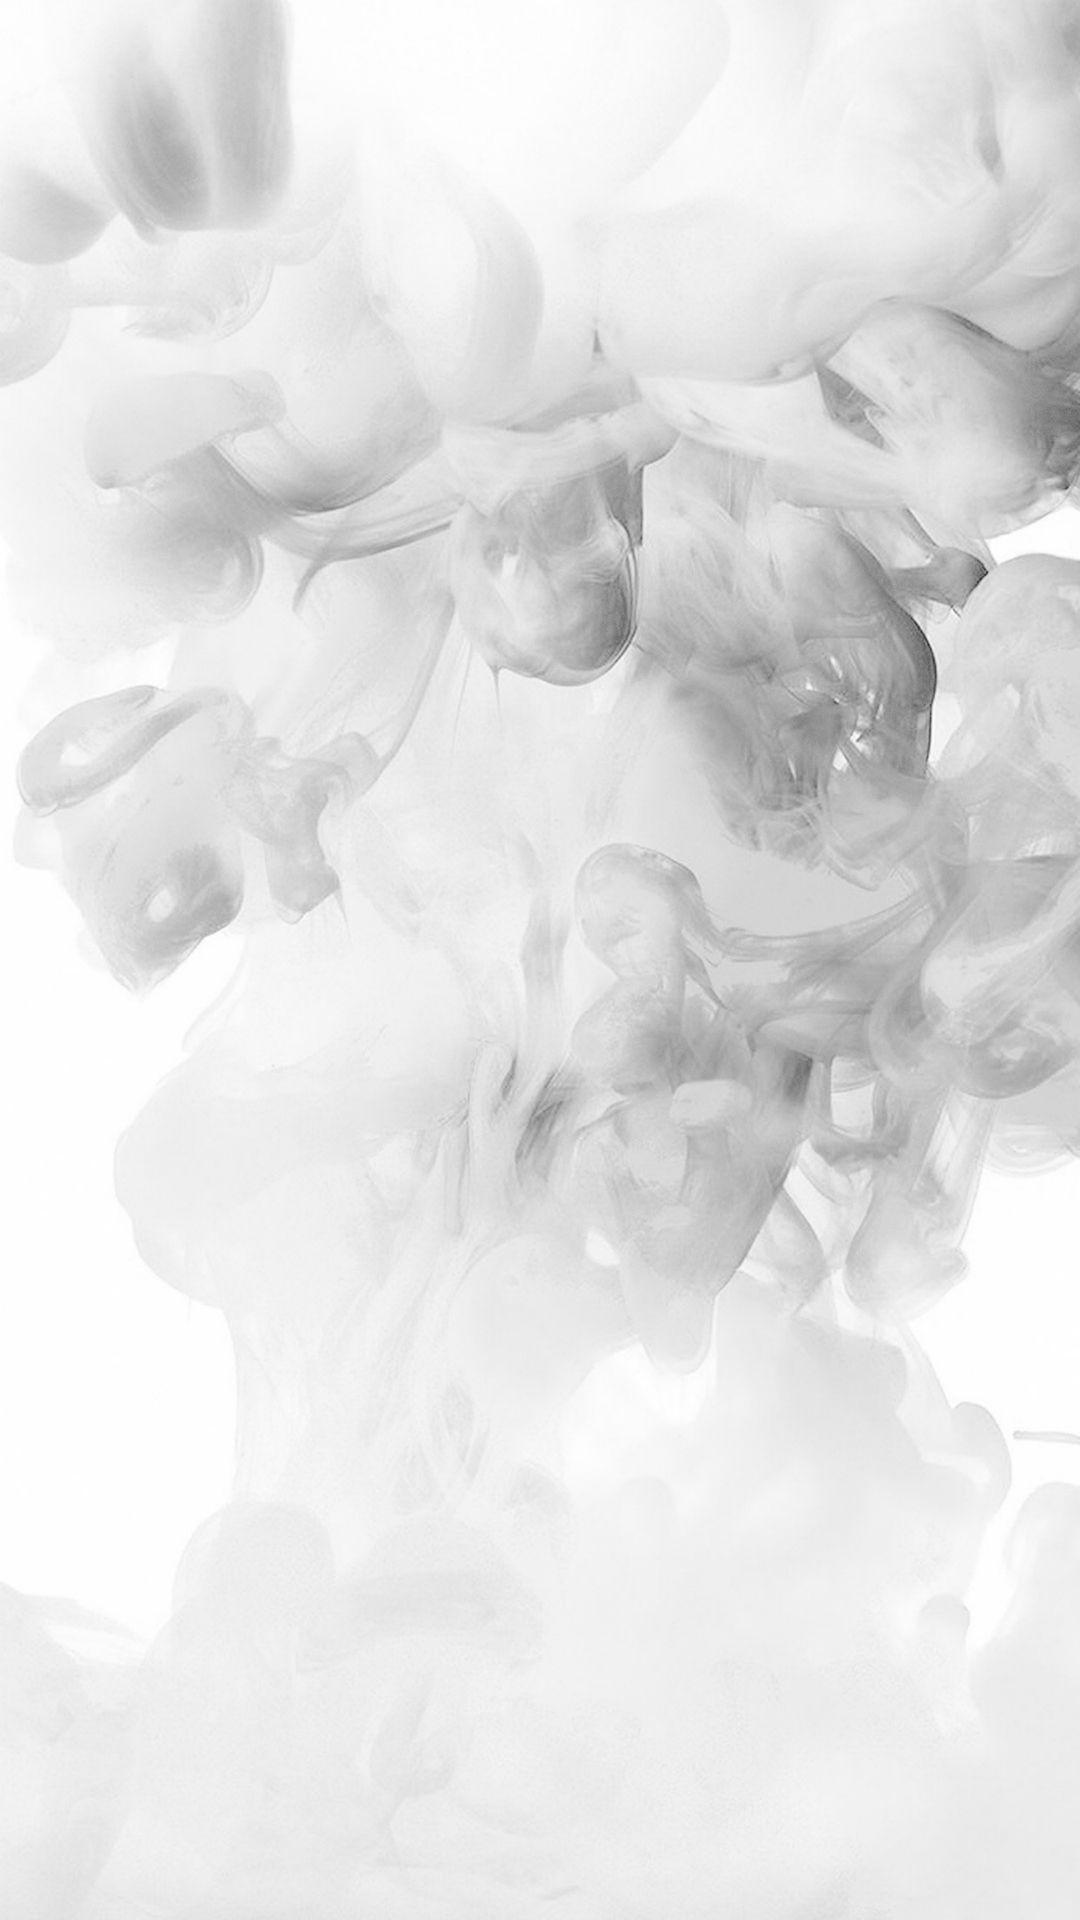 Smoke White Abstract Fog Art Illust iPhone 8 Wallpaper